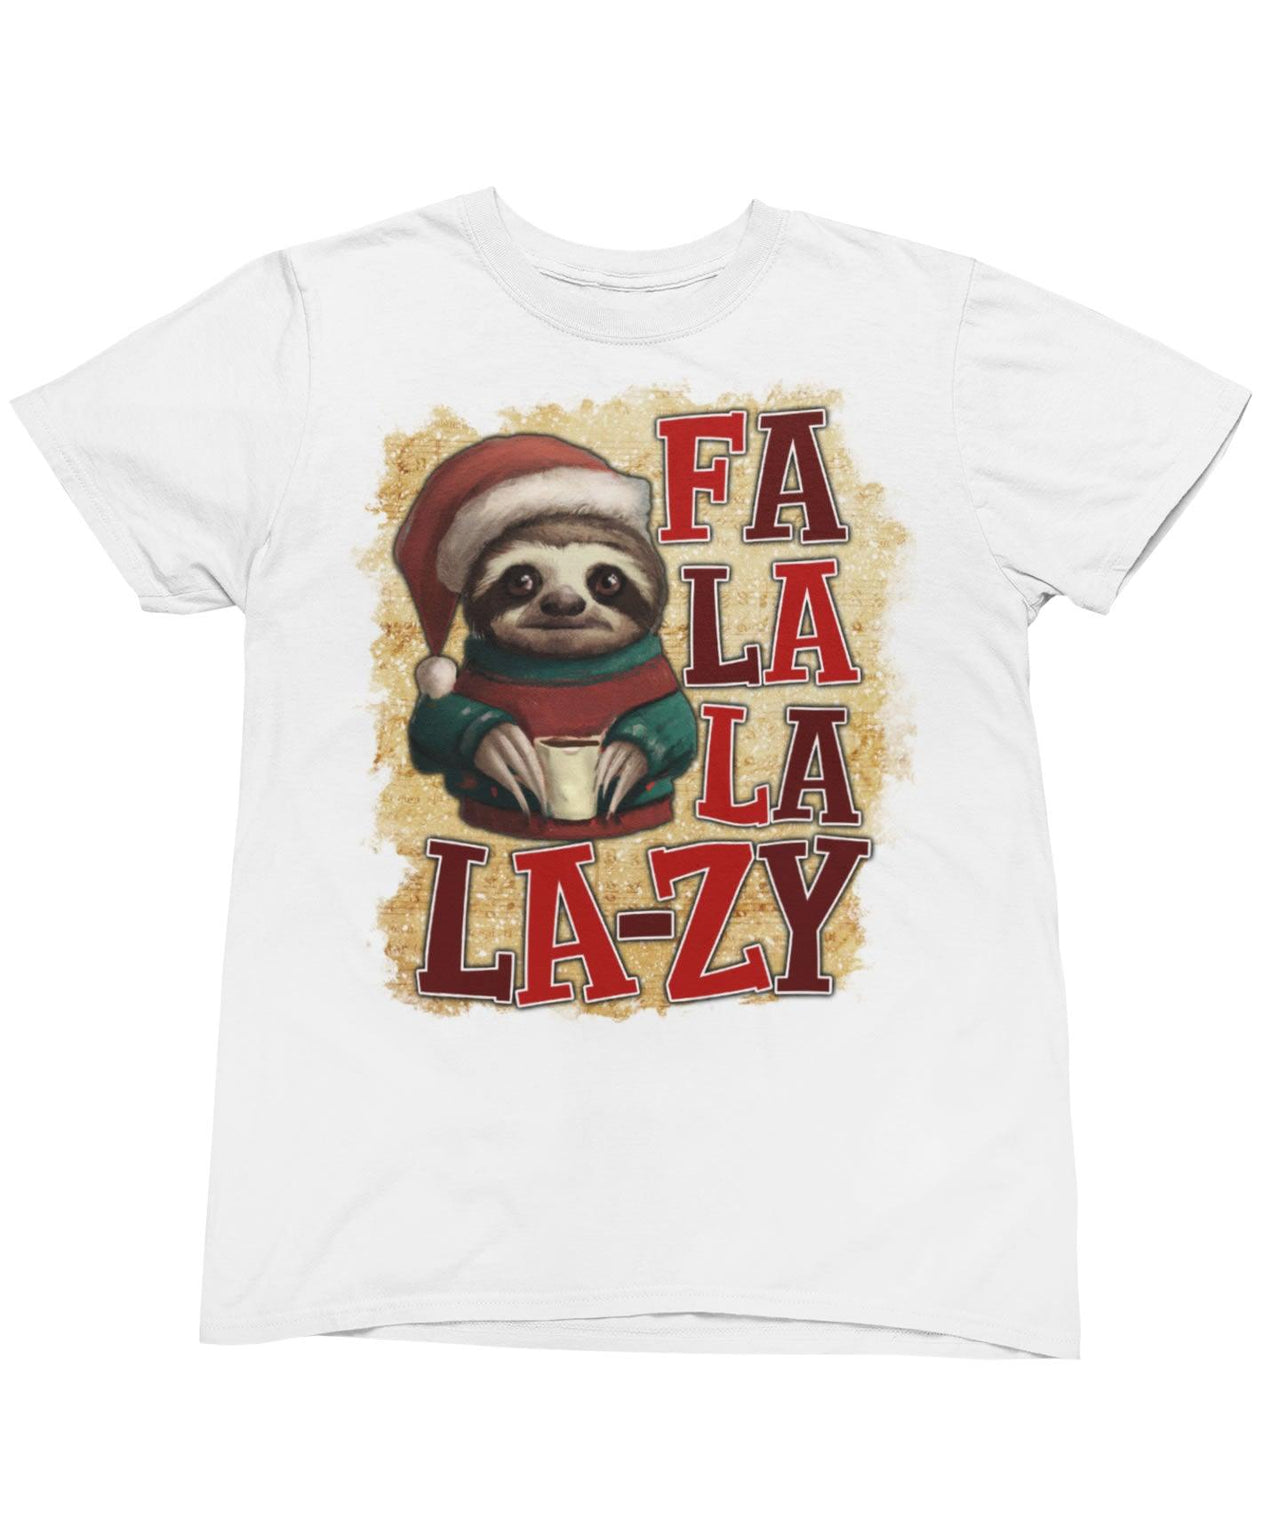 Sloth Fa La La Lazy Christmas Unisex Unisex T-Shirt For Men And Women 8Ball